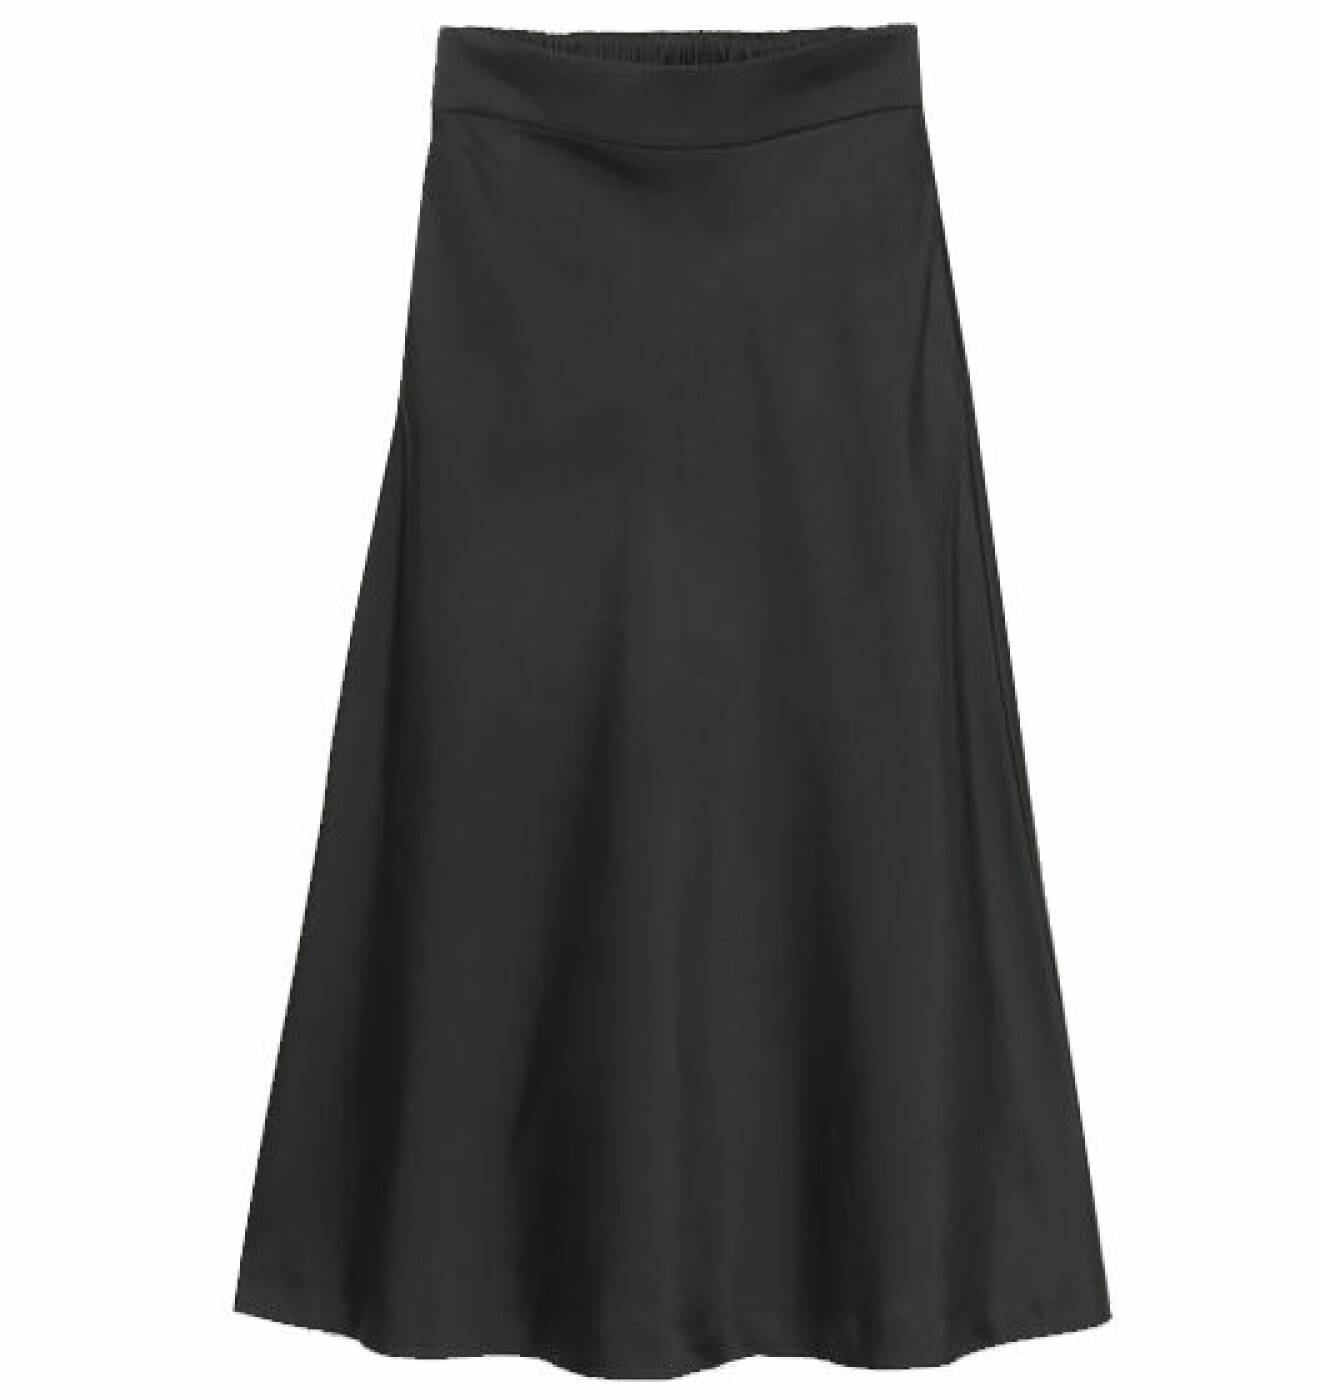 basplagg för dam - svart midikjol i satin från Inwear/MQ Marqet